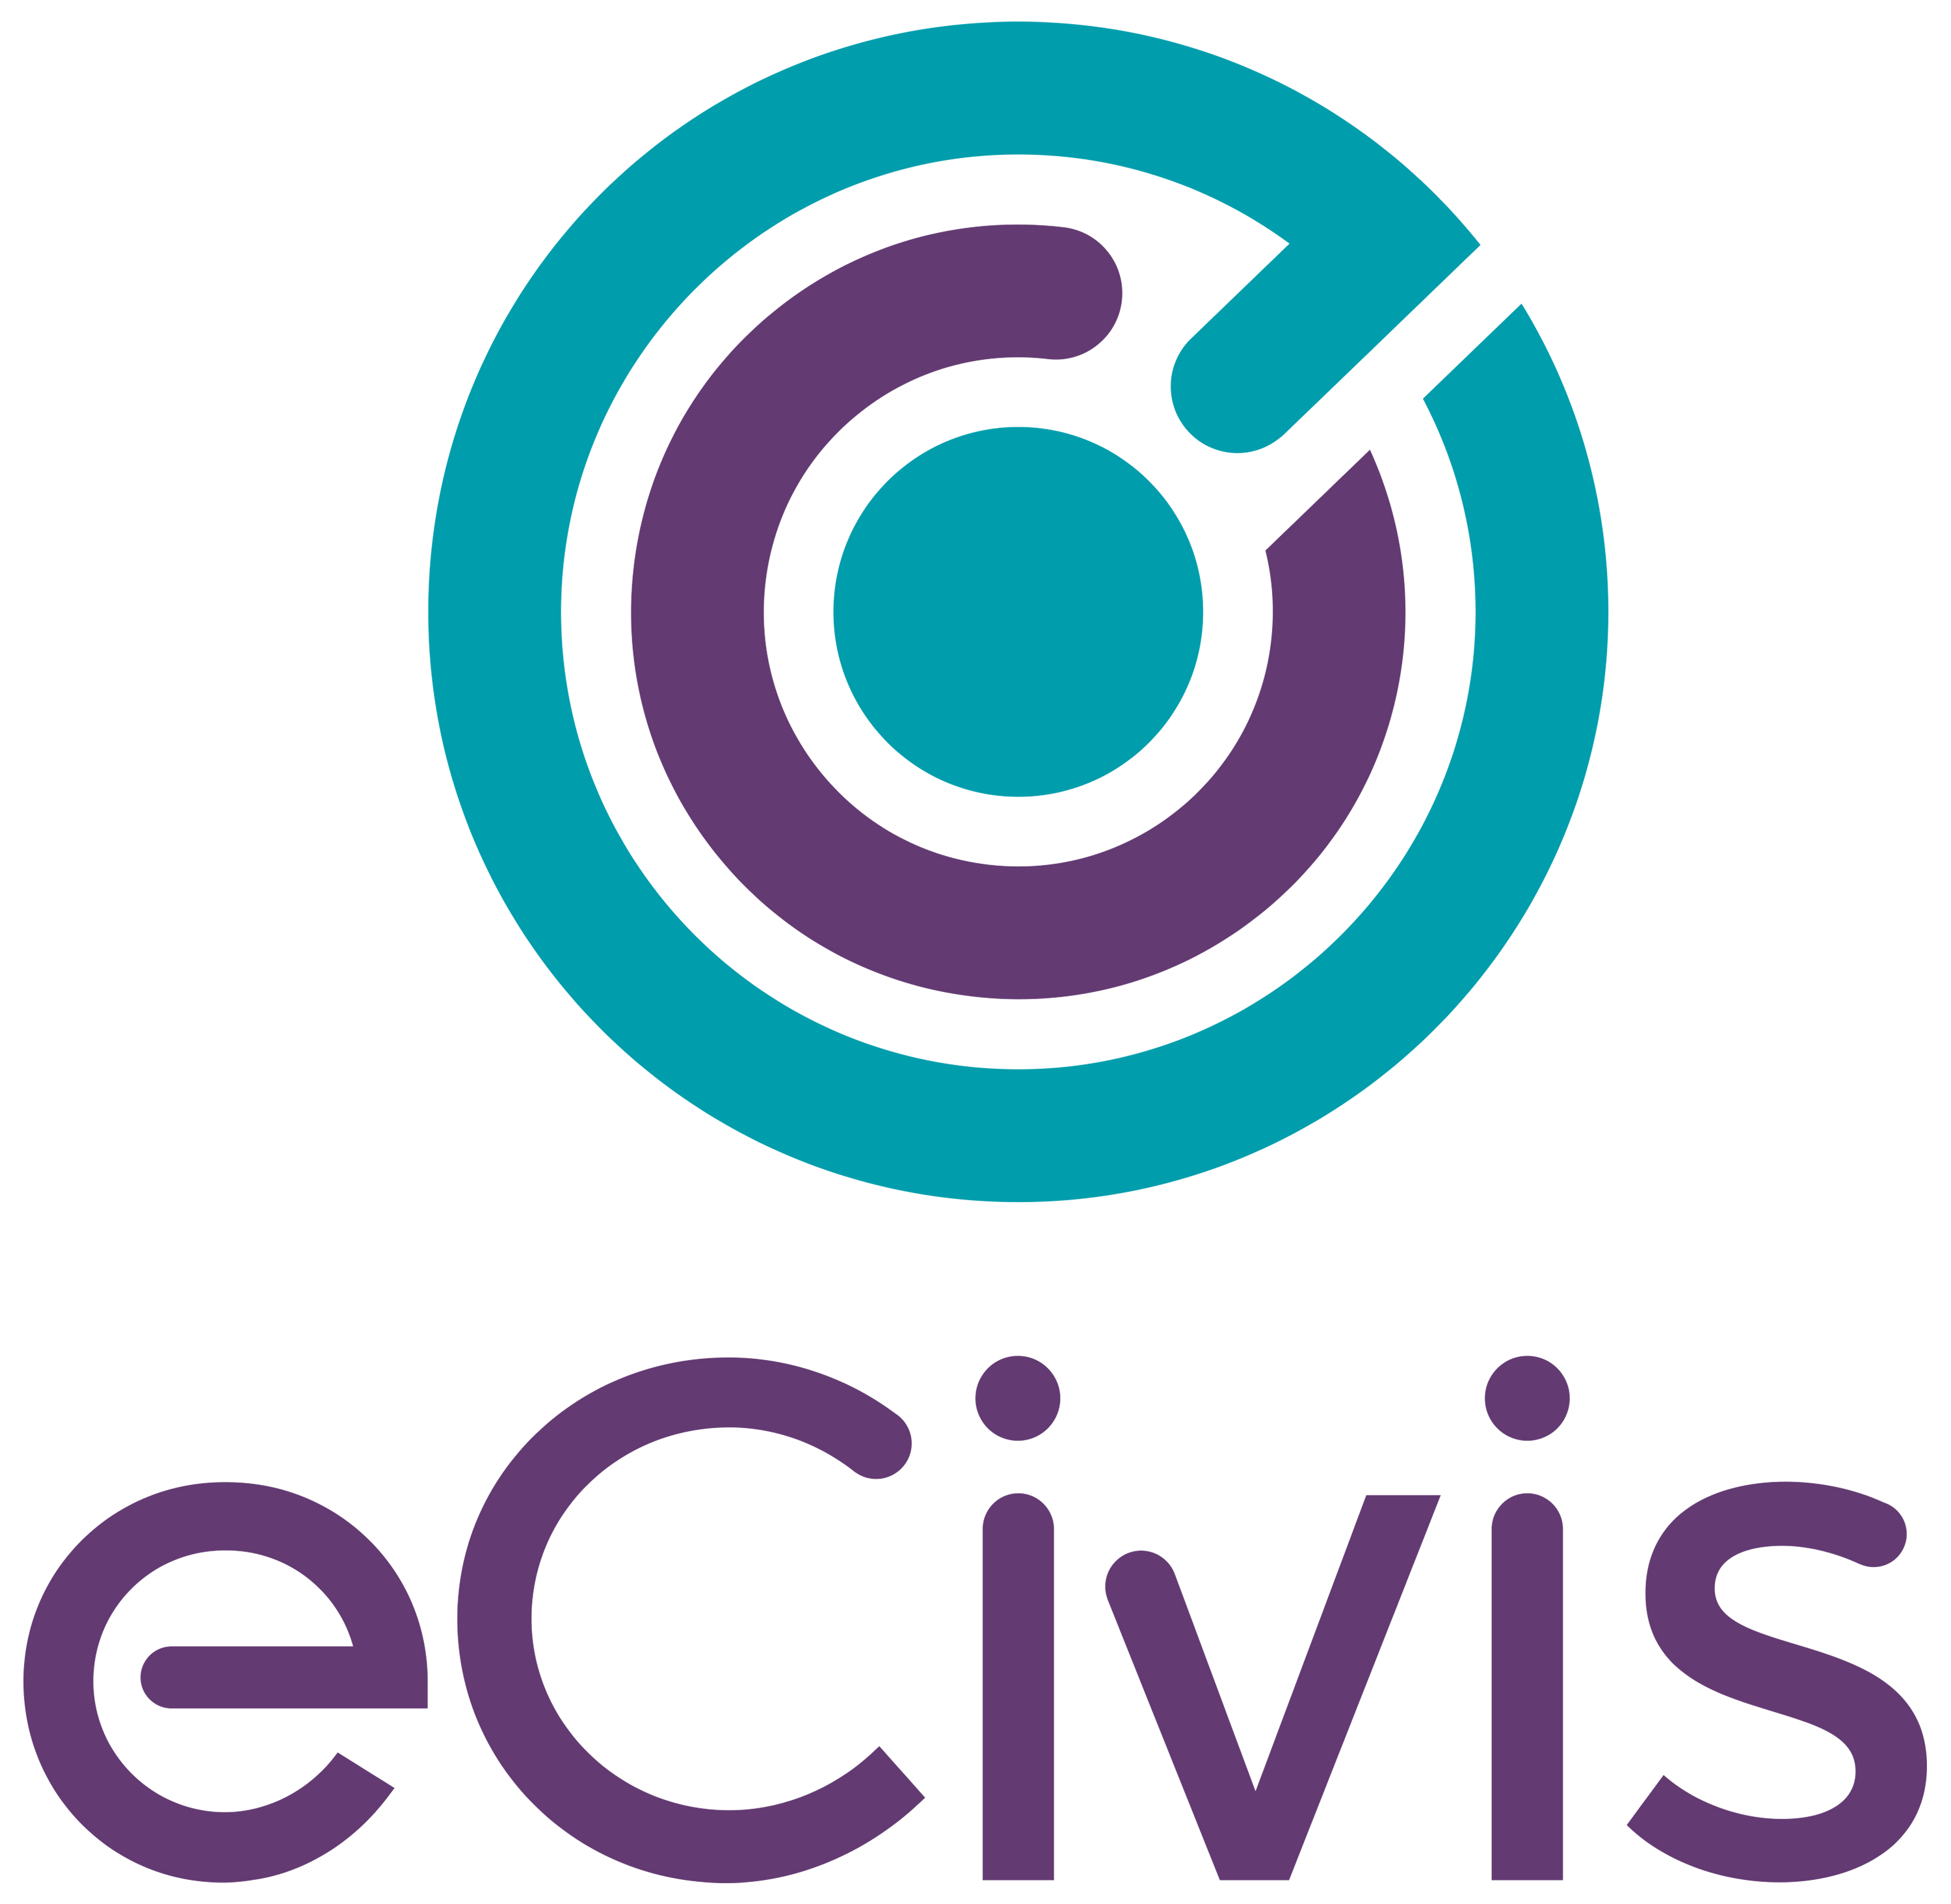 eCivis Logo.jpg